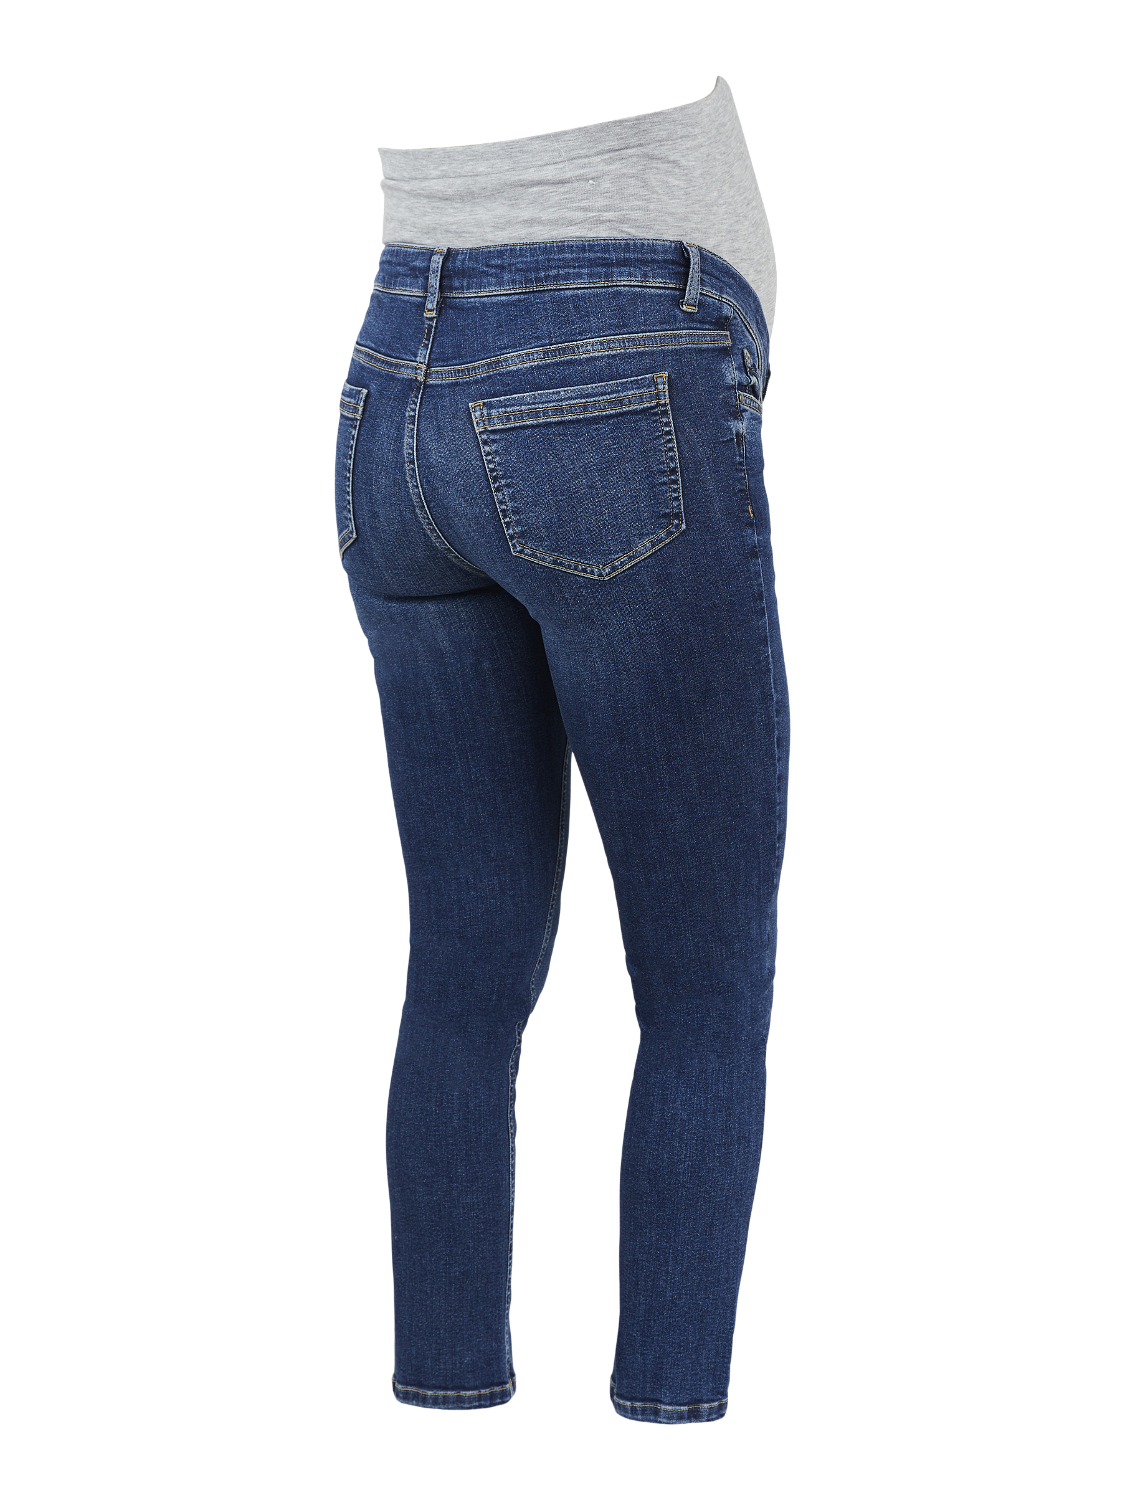 MLHAMPSHIRE Jeans - Dark Blue Denim